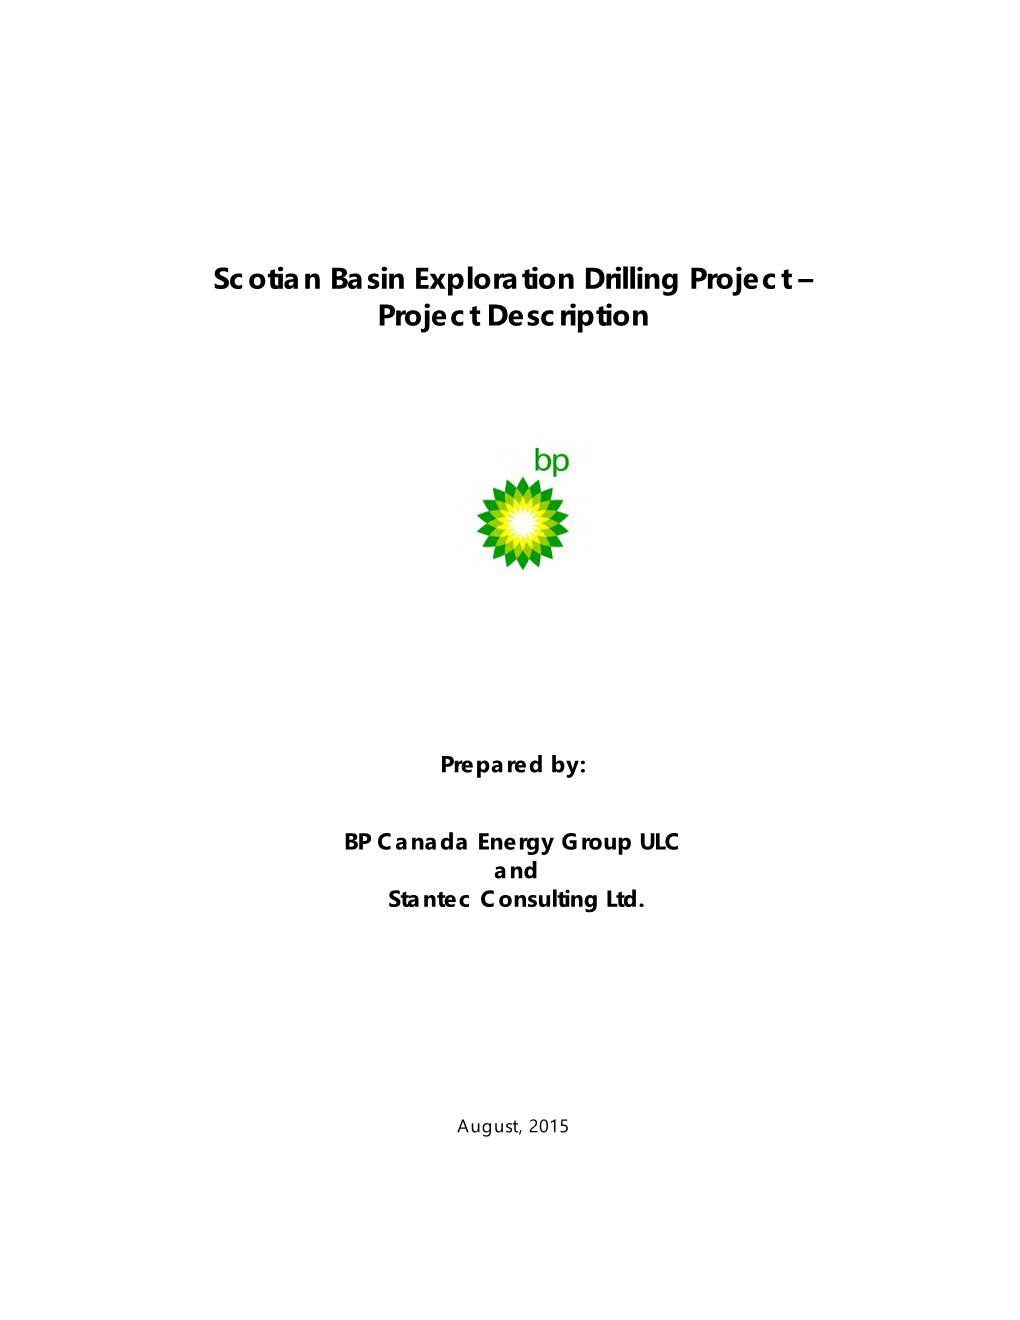 Scotian Basin Exploration Drilling Project – Project Description